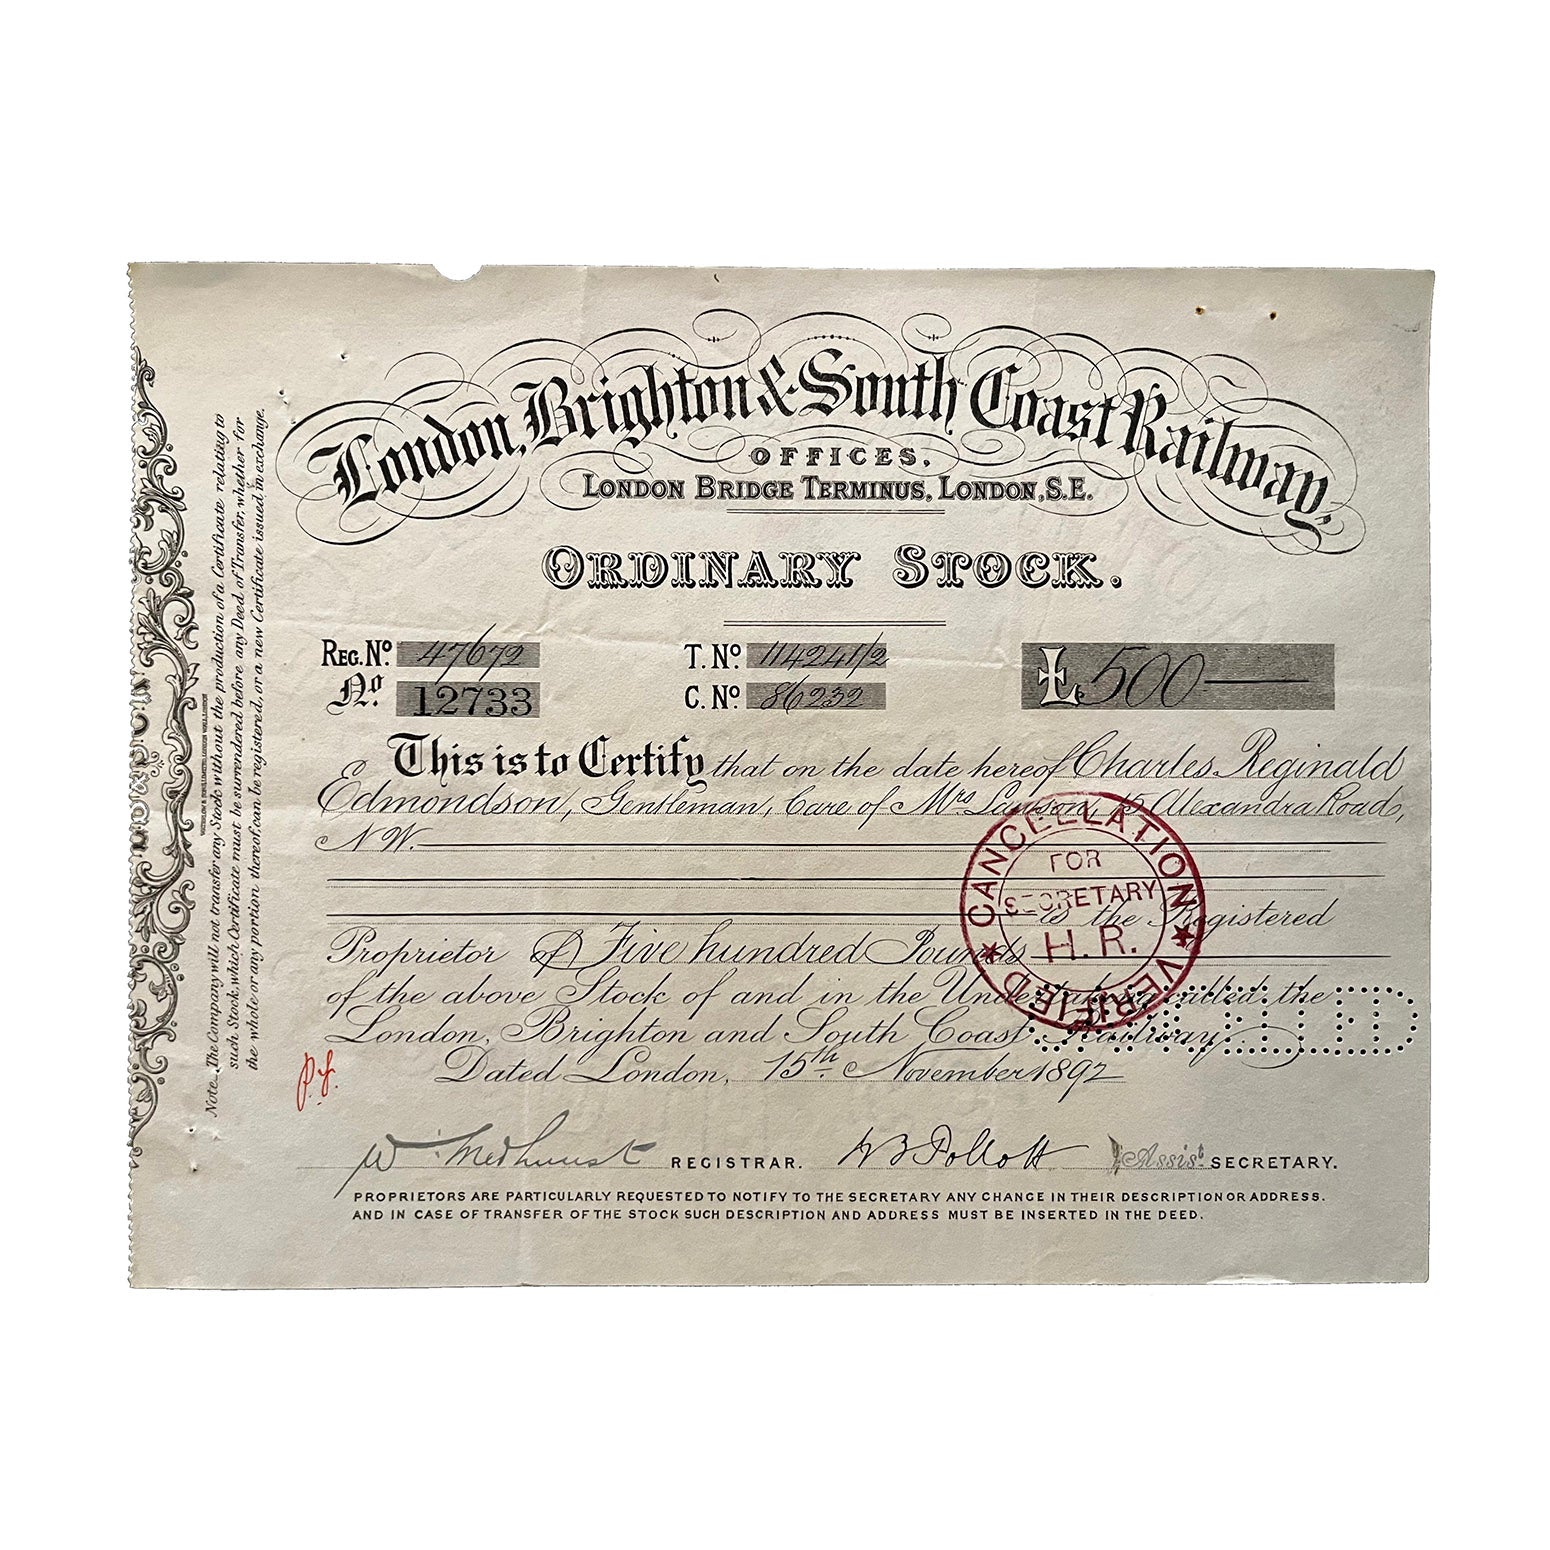 Original railway share certificate, London Brighton &amp; South Coast Railway, Ordinary Stock, £500, issued 1892.